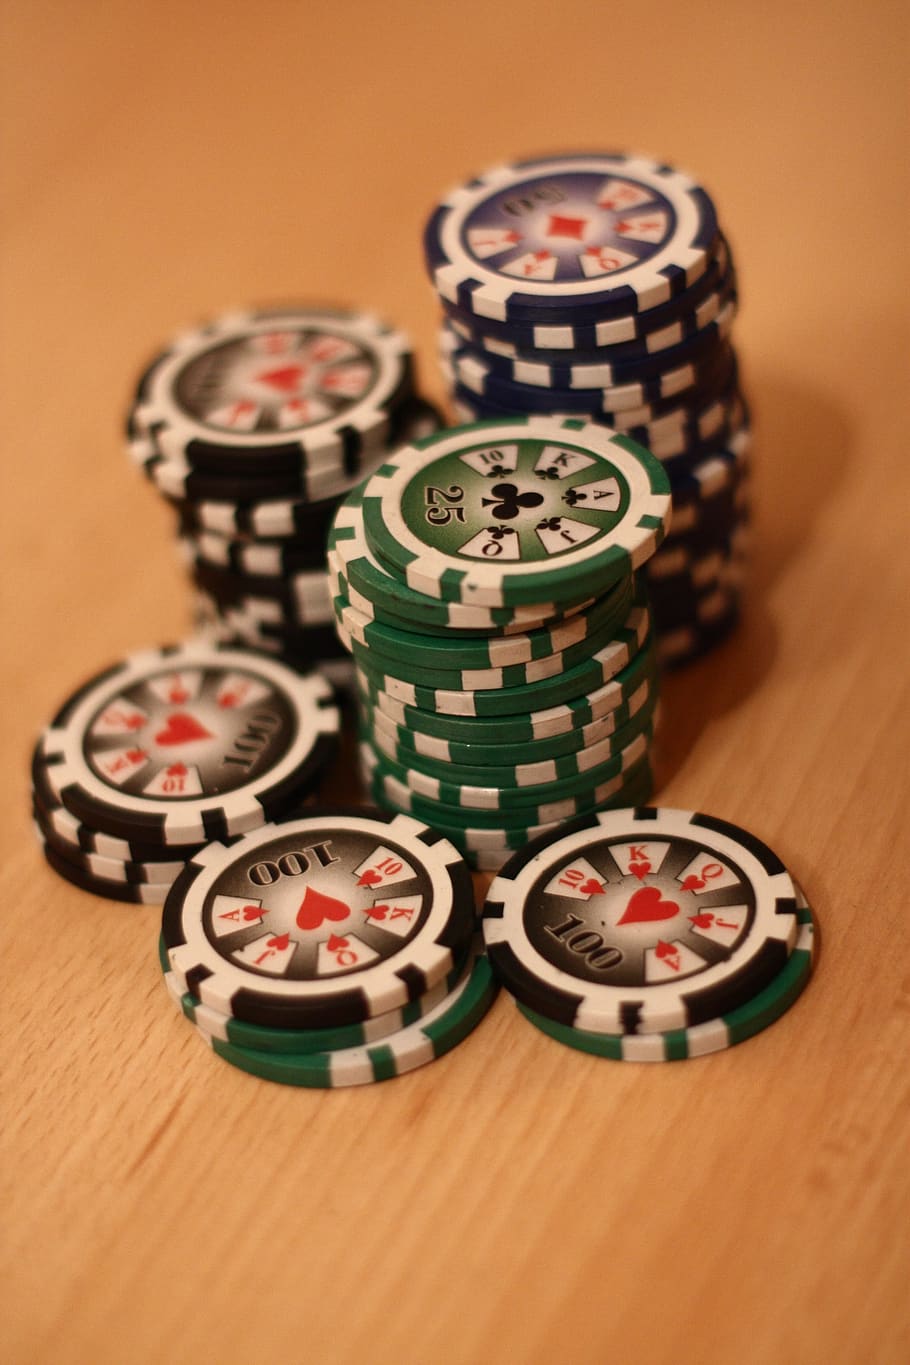 Maximizing bonuses and rewards in online gambling